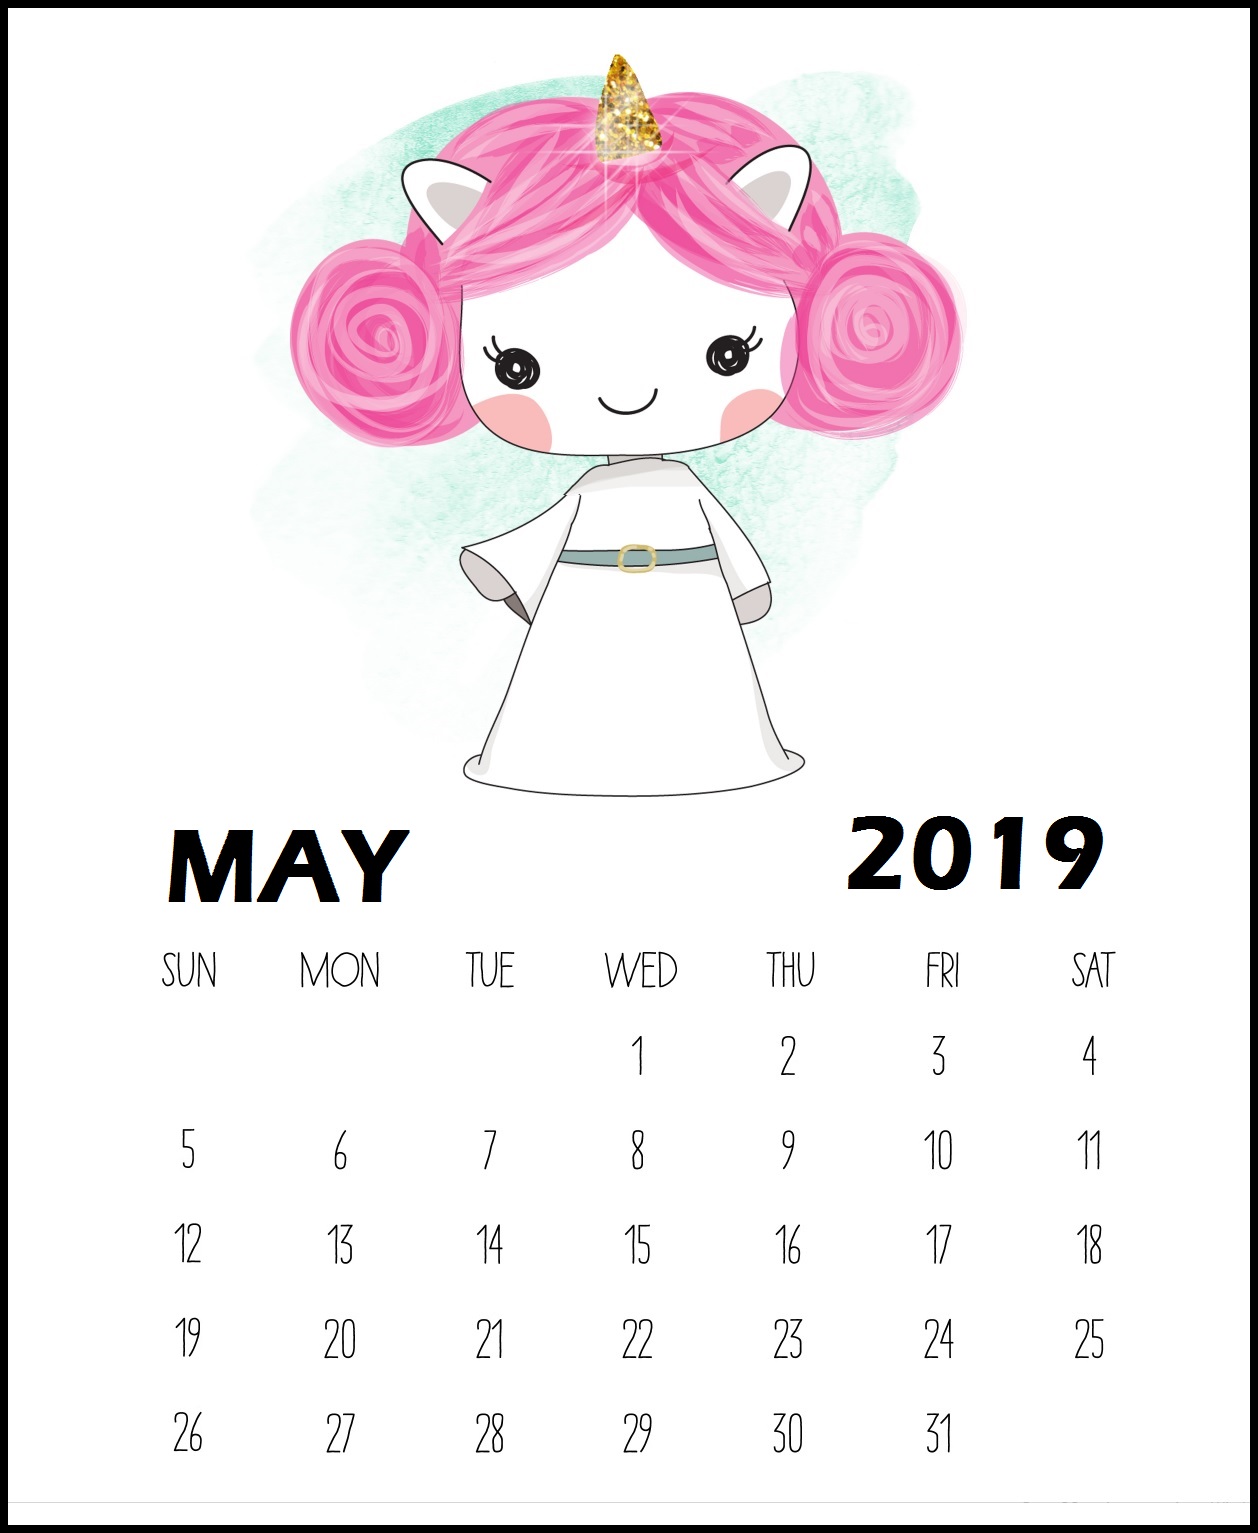 Cool May 2019 Calendar To Print